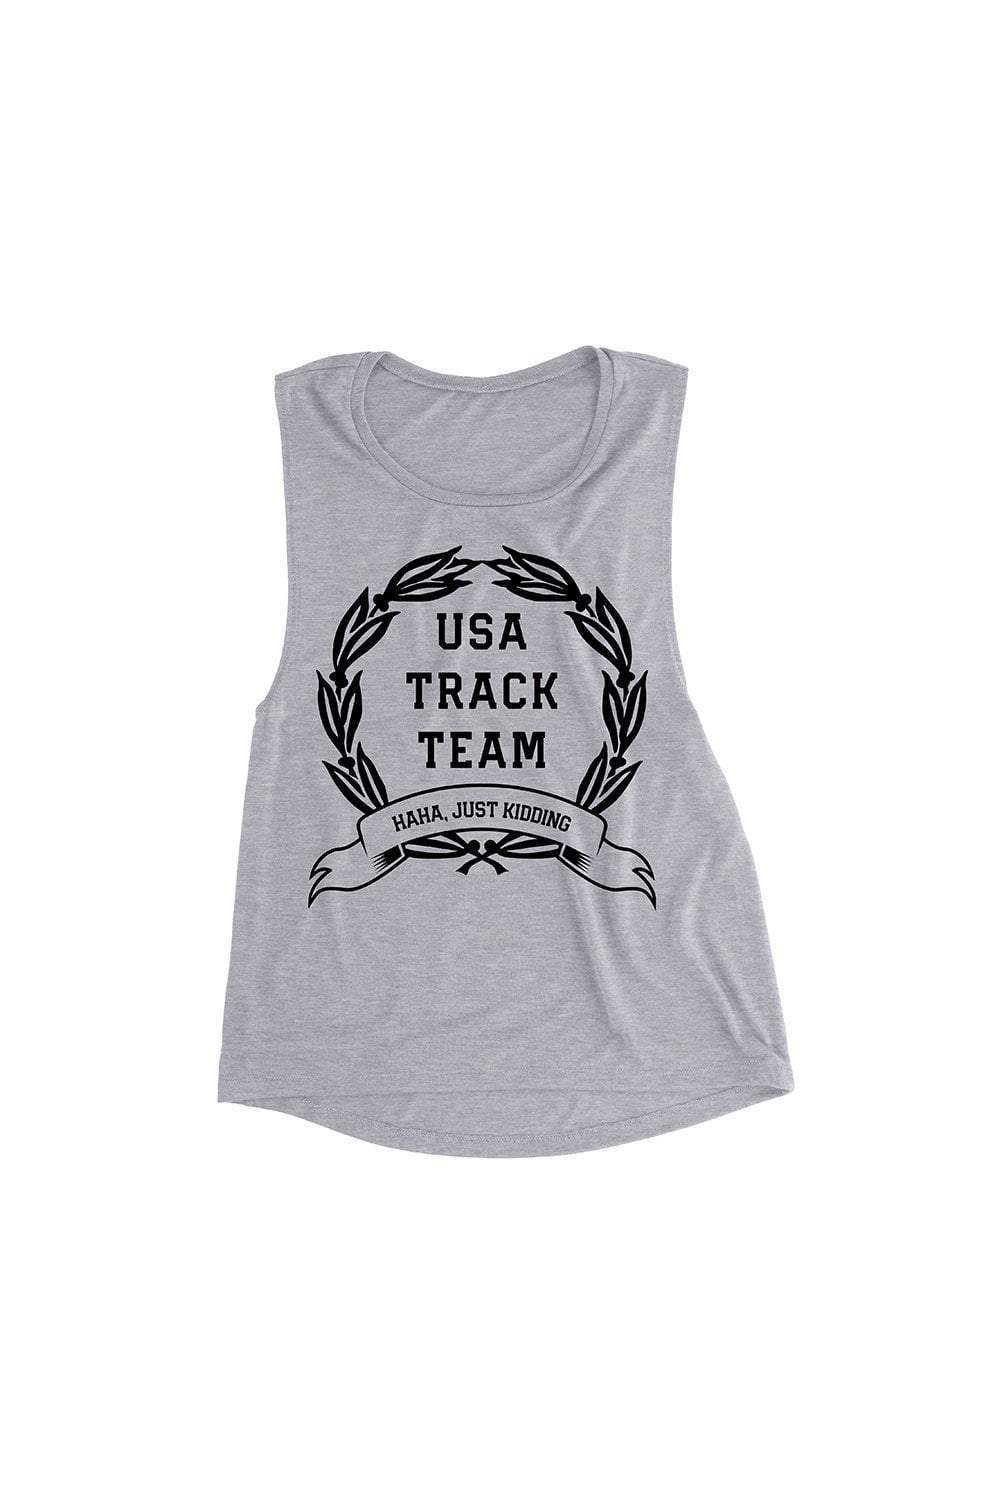 Sarah Marie Design Studio Women's Tank Small / Grey USA Track Team Muscle Tank